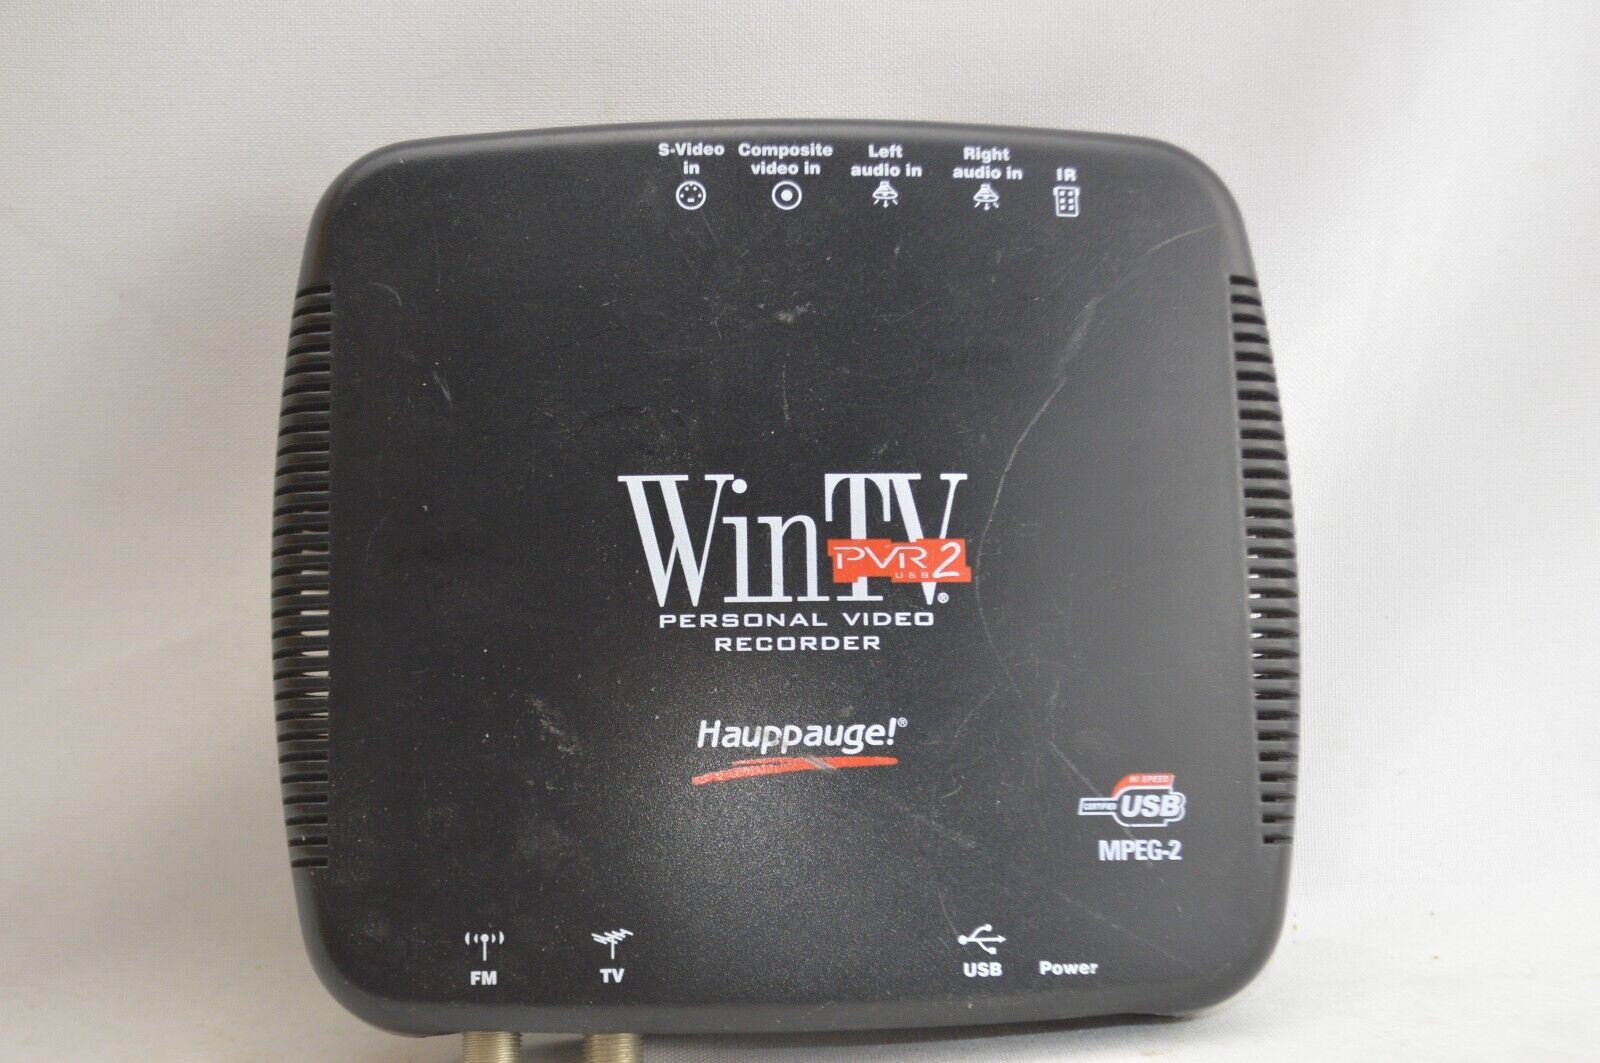 Hauppauge WinTV-PVR MCE Edition USB2 Personal Video Recorder Model 99016 